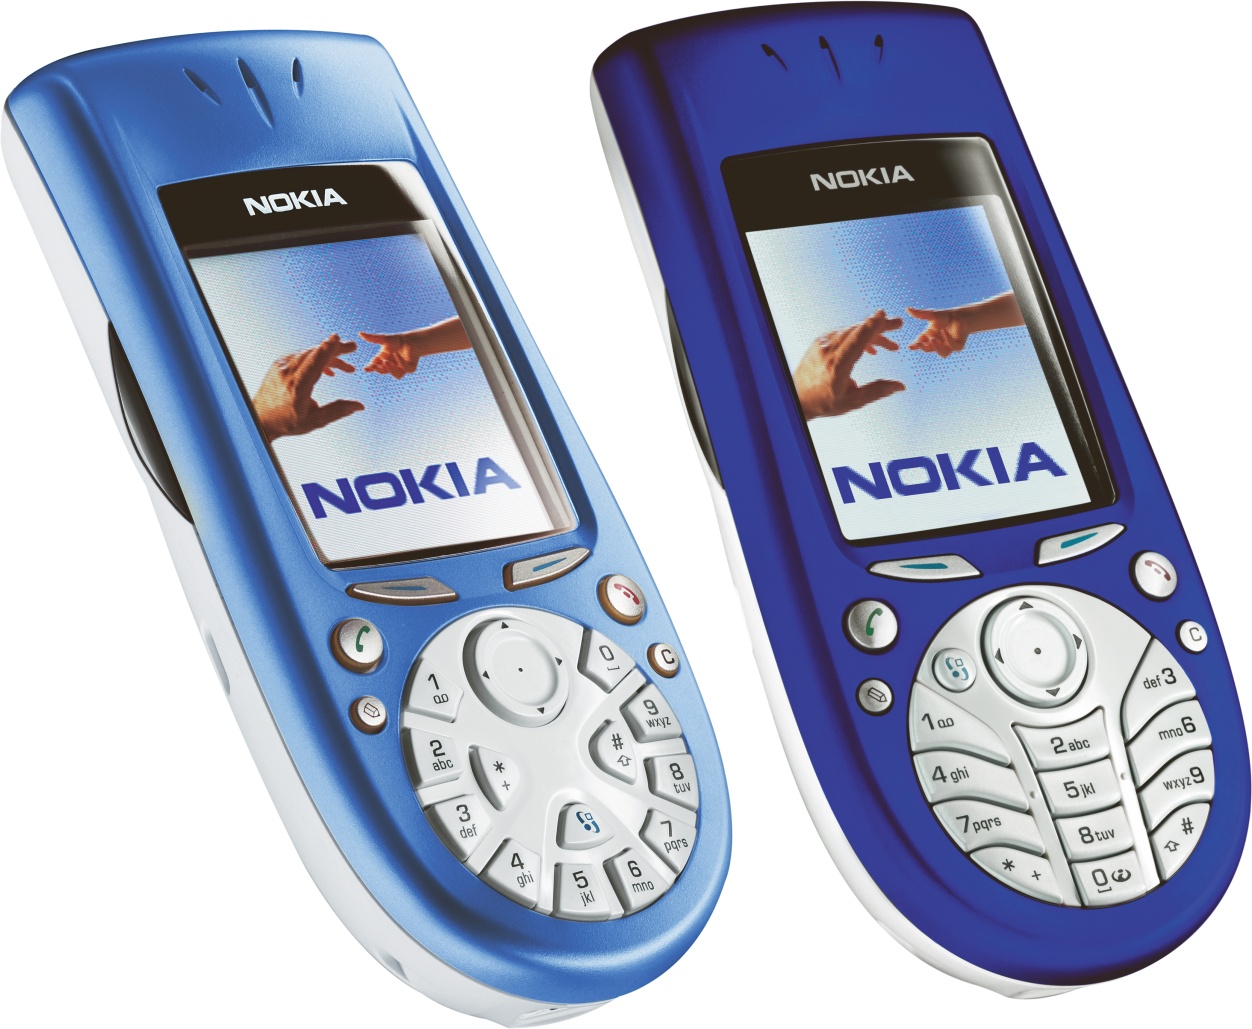 Retromobe - retro mobile phones and other gadgets: Nokia 3660 (2003)